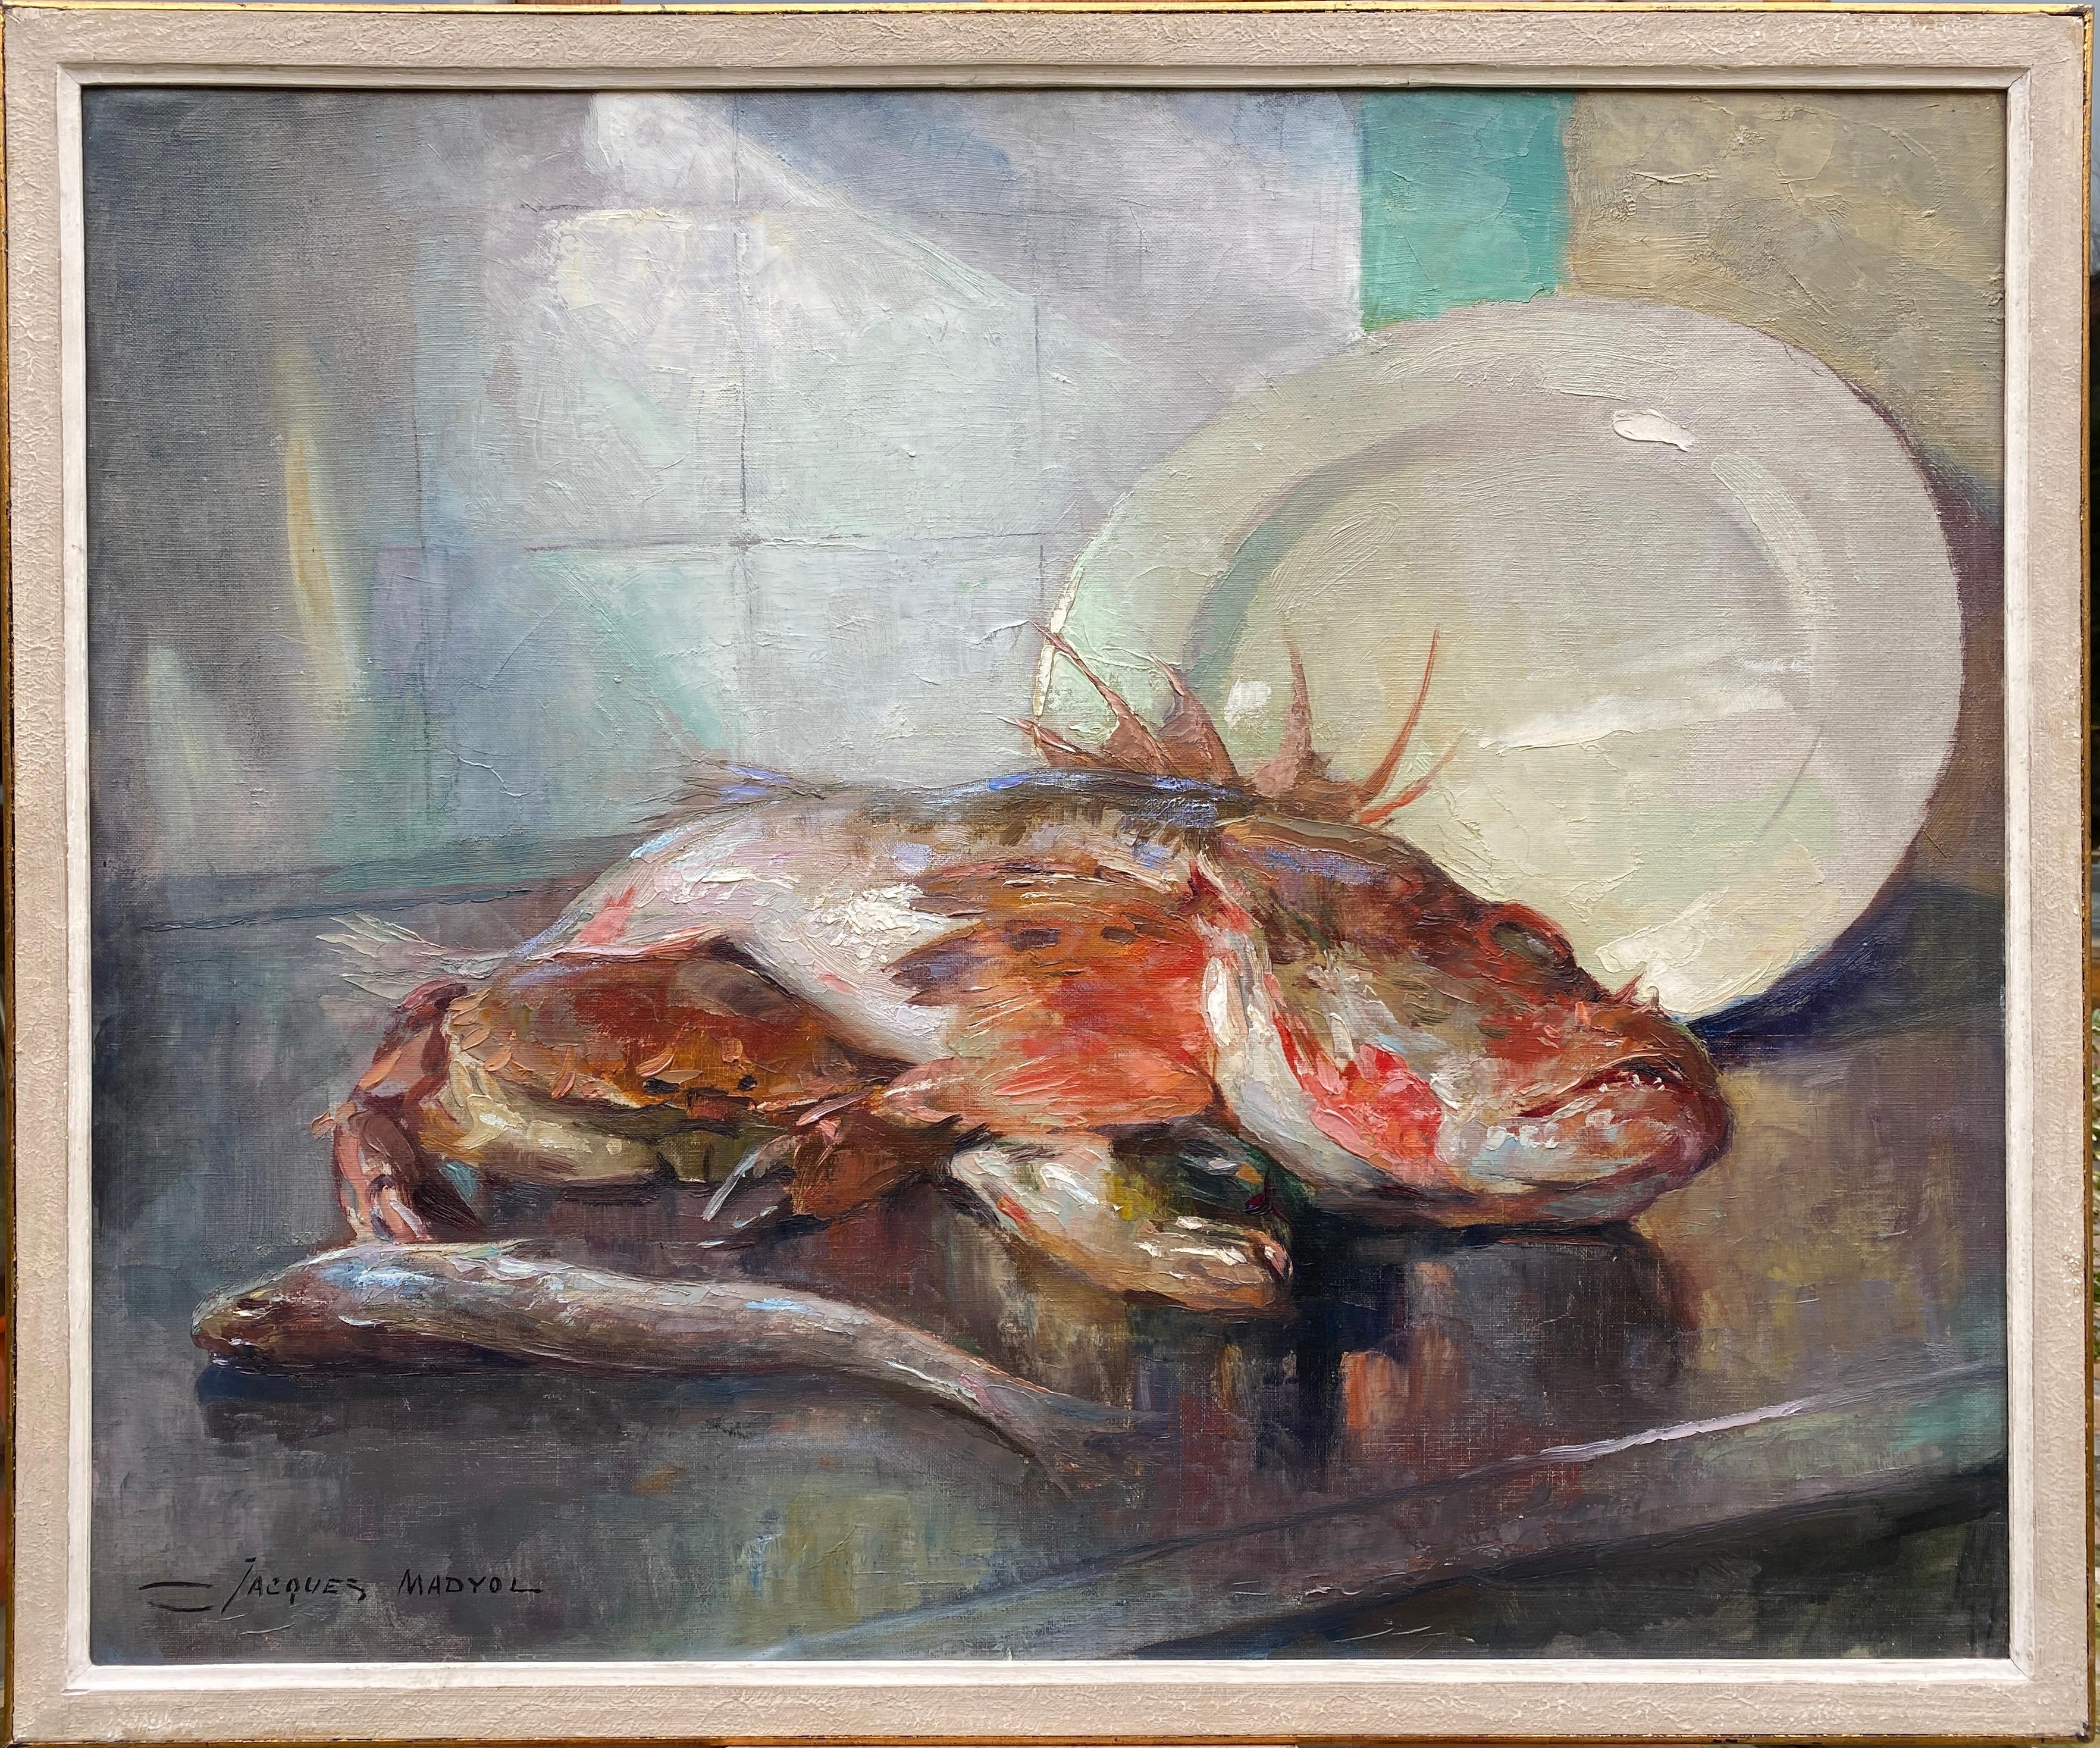 Figurative Painting Madyol Jacques - Un poisson-scorpion, Jacques Madyol, Bruxelles 1871 - 1950, Peintre belge